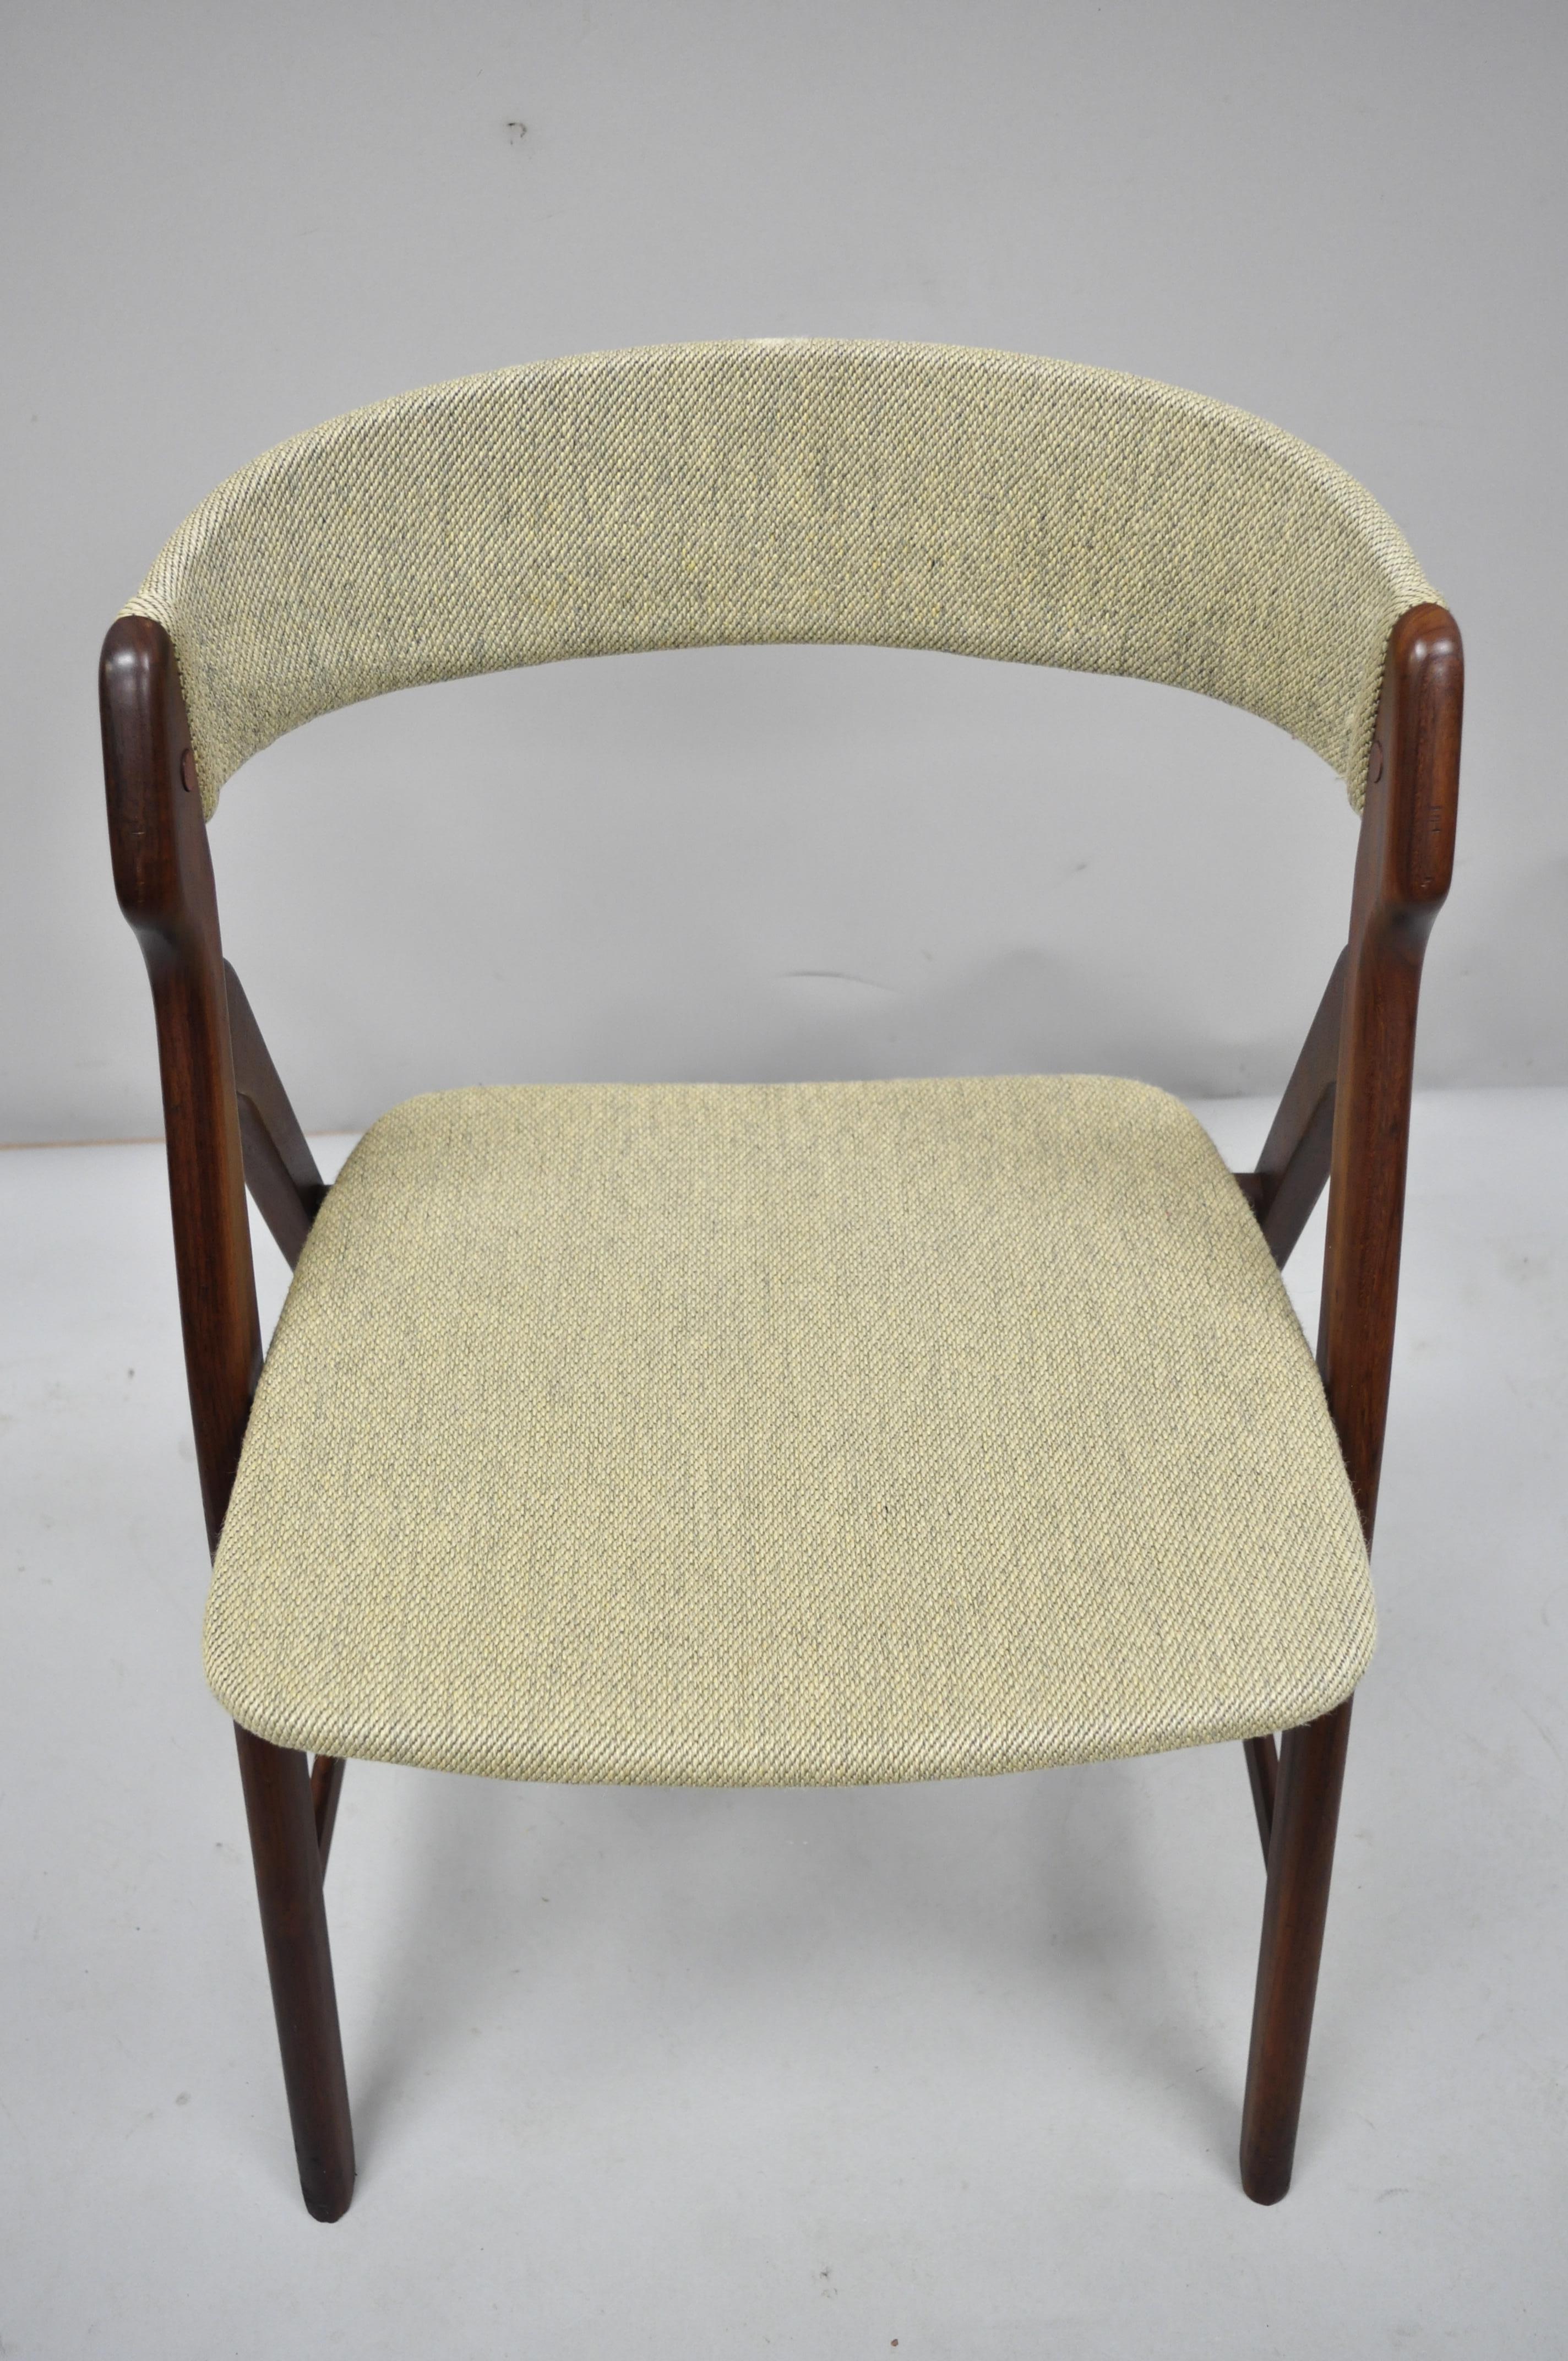 Midcentury Danish Modern Teak A-Frame Dining Chair by T.H. Harlev Farstrup For Sale 4